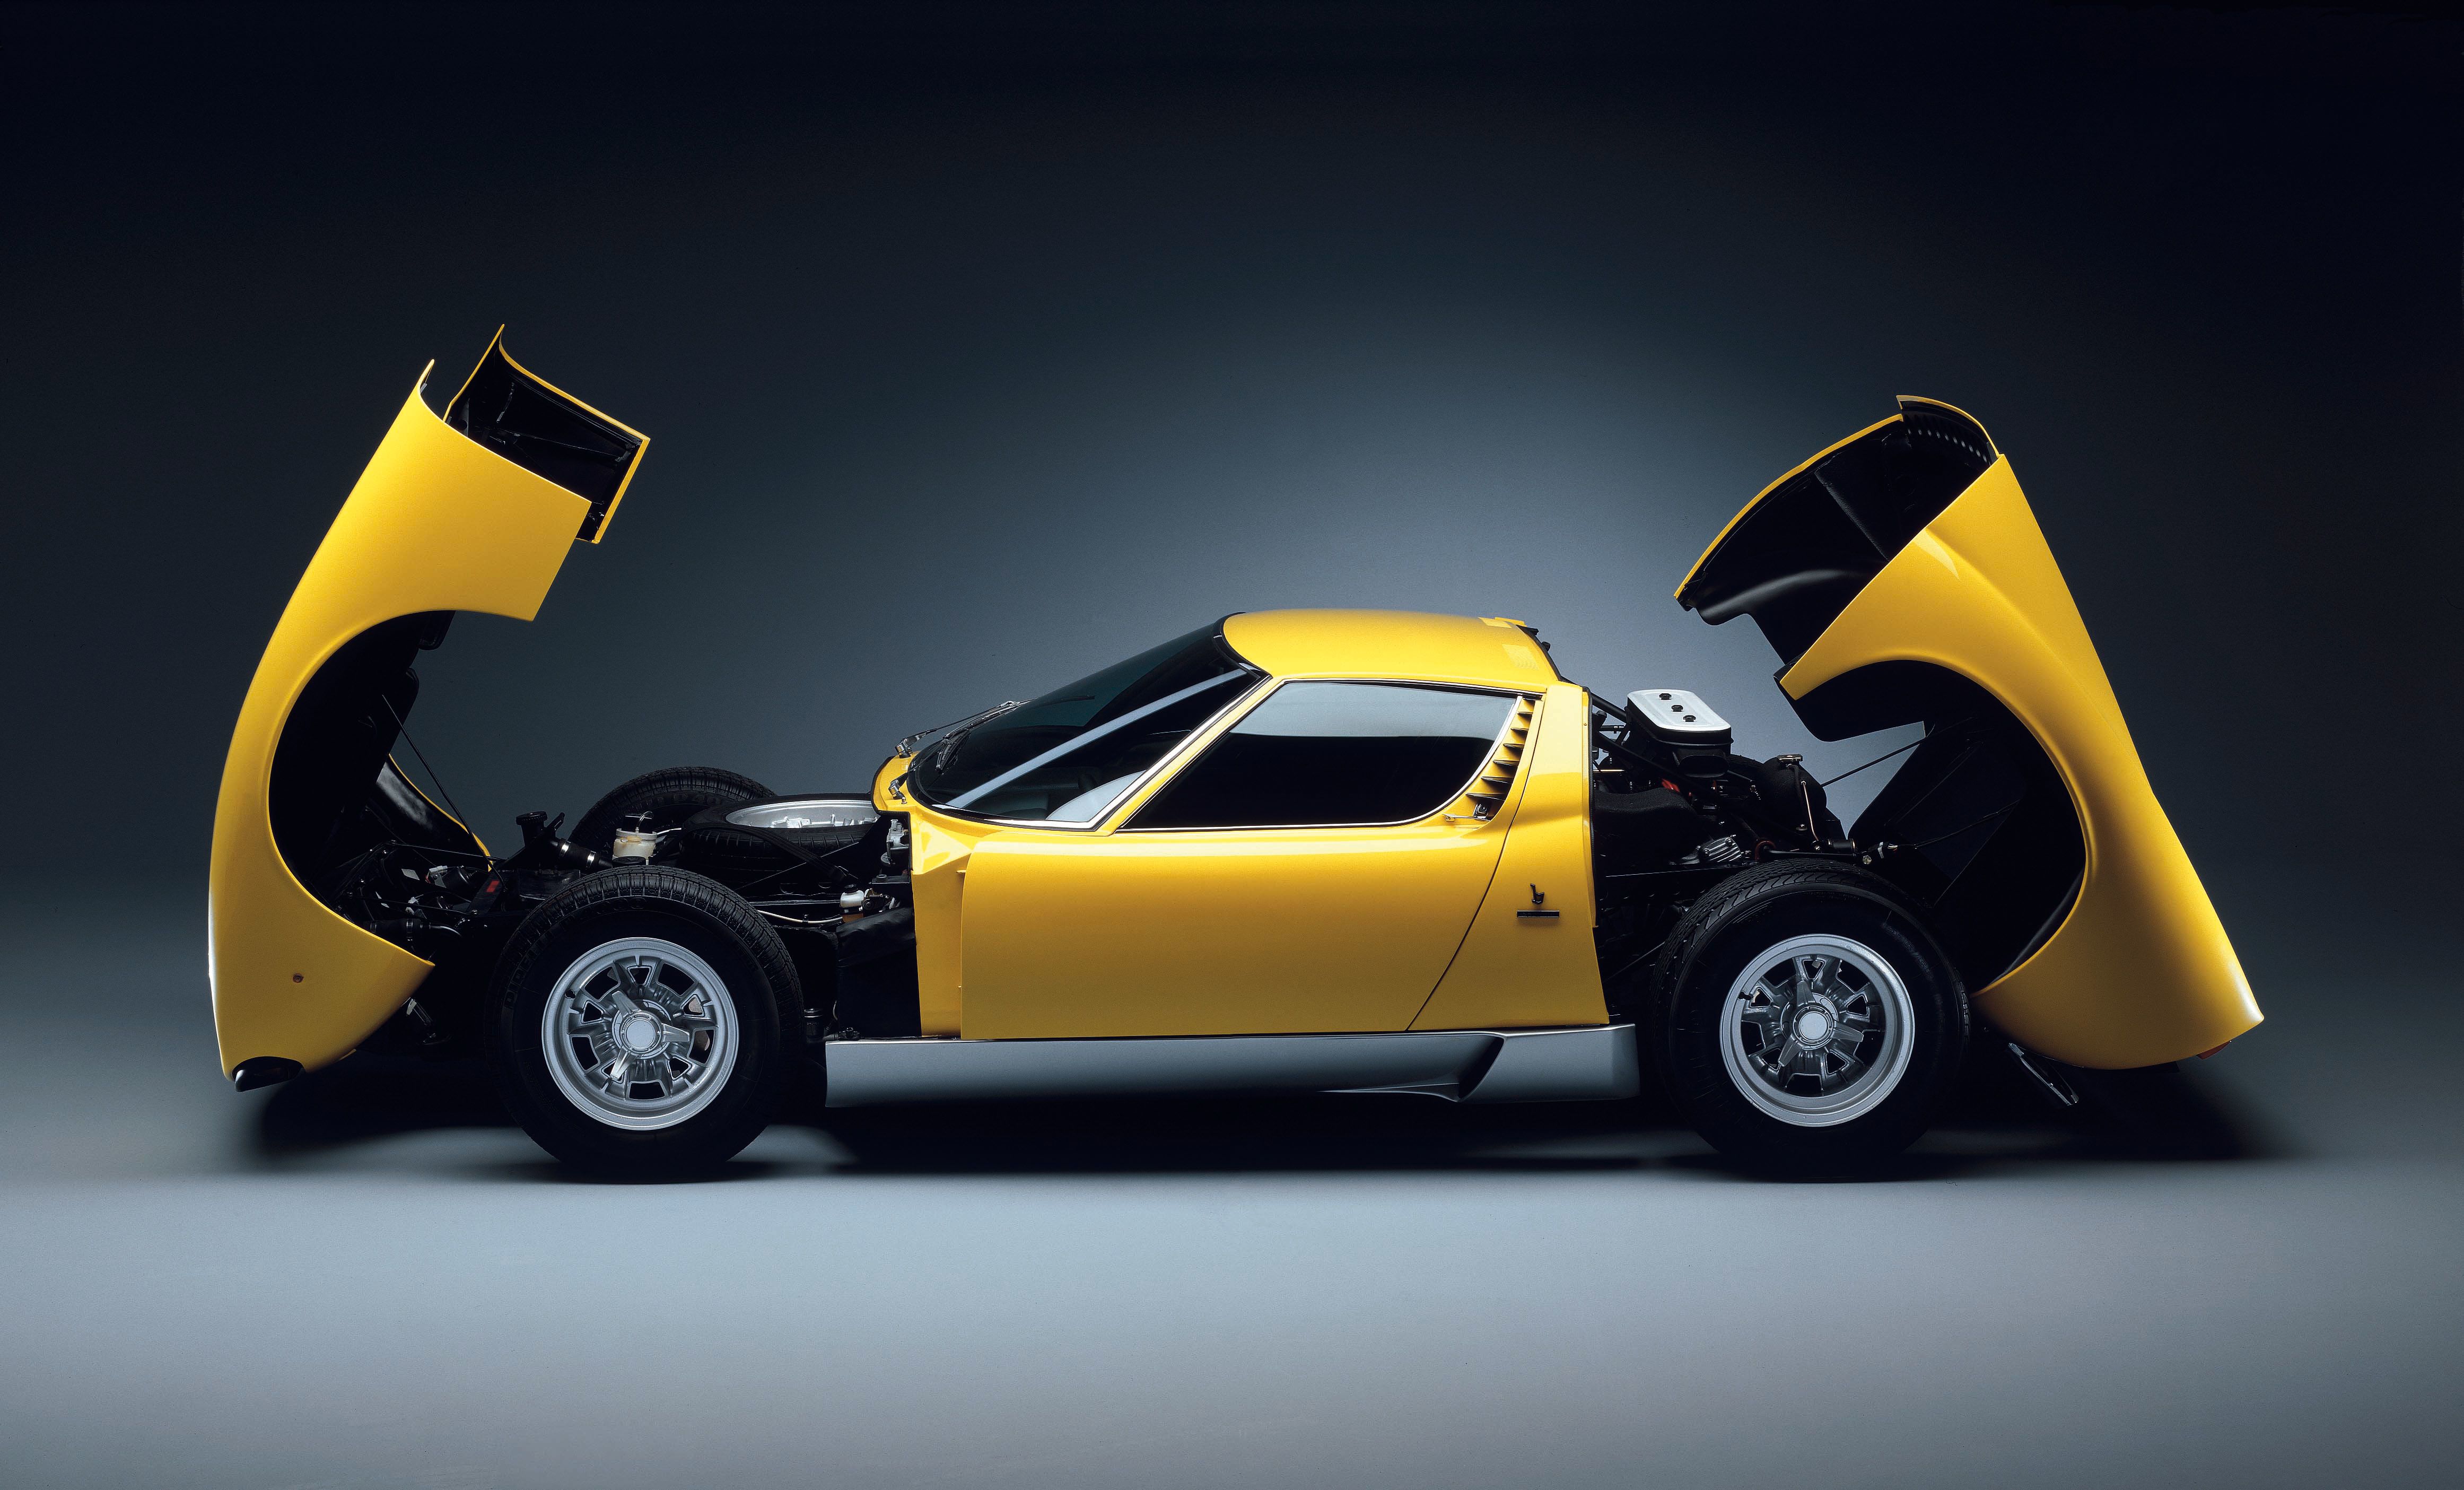 Lamborghini Sports Car, Iconic Raging Bull